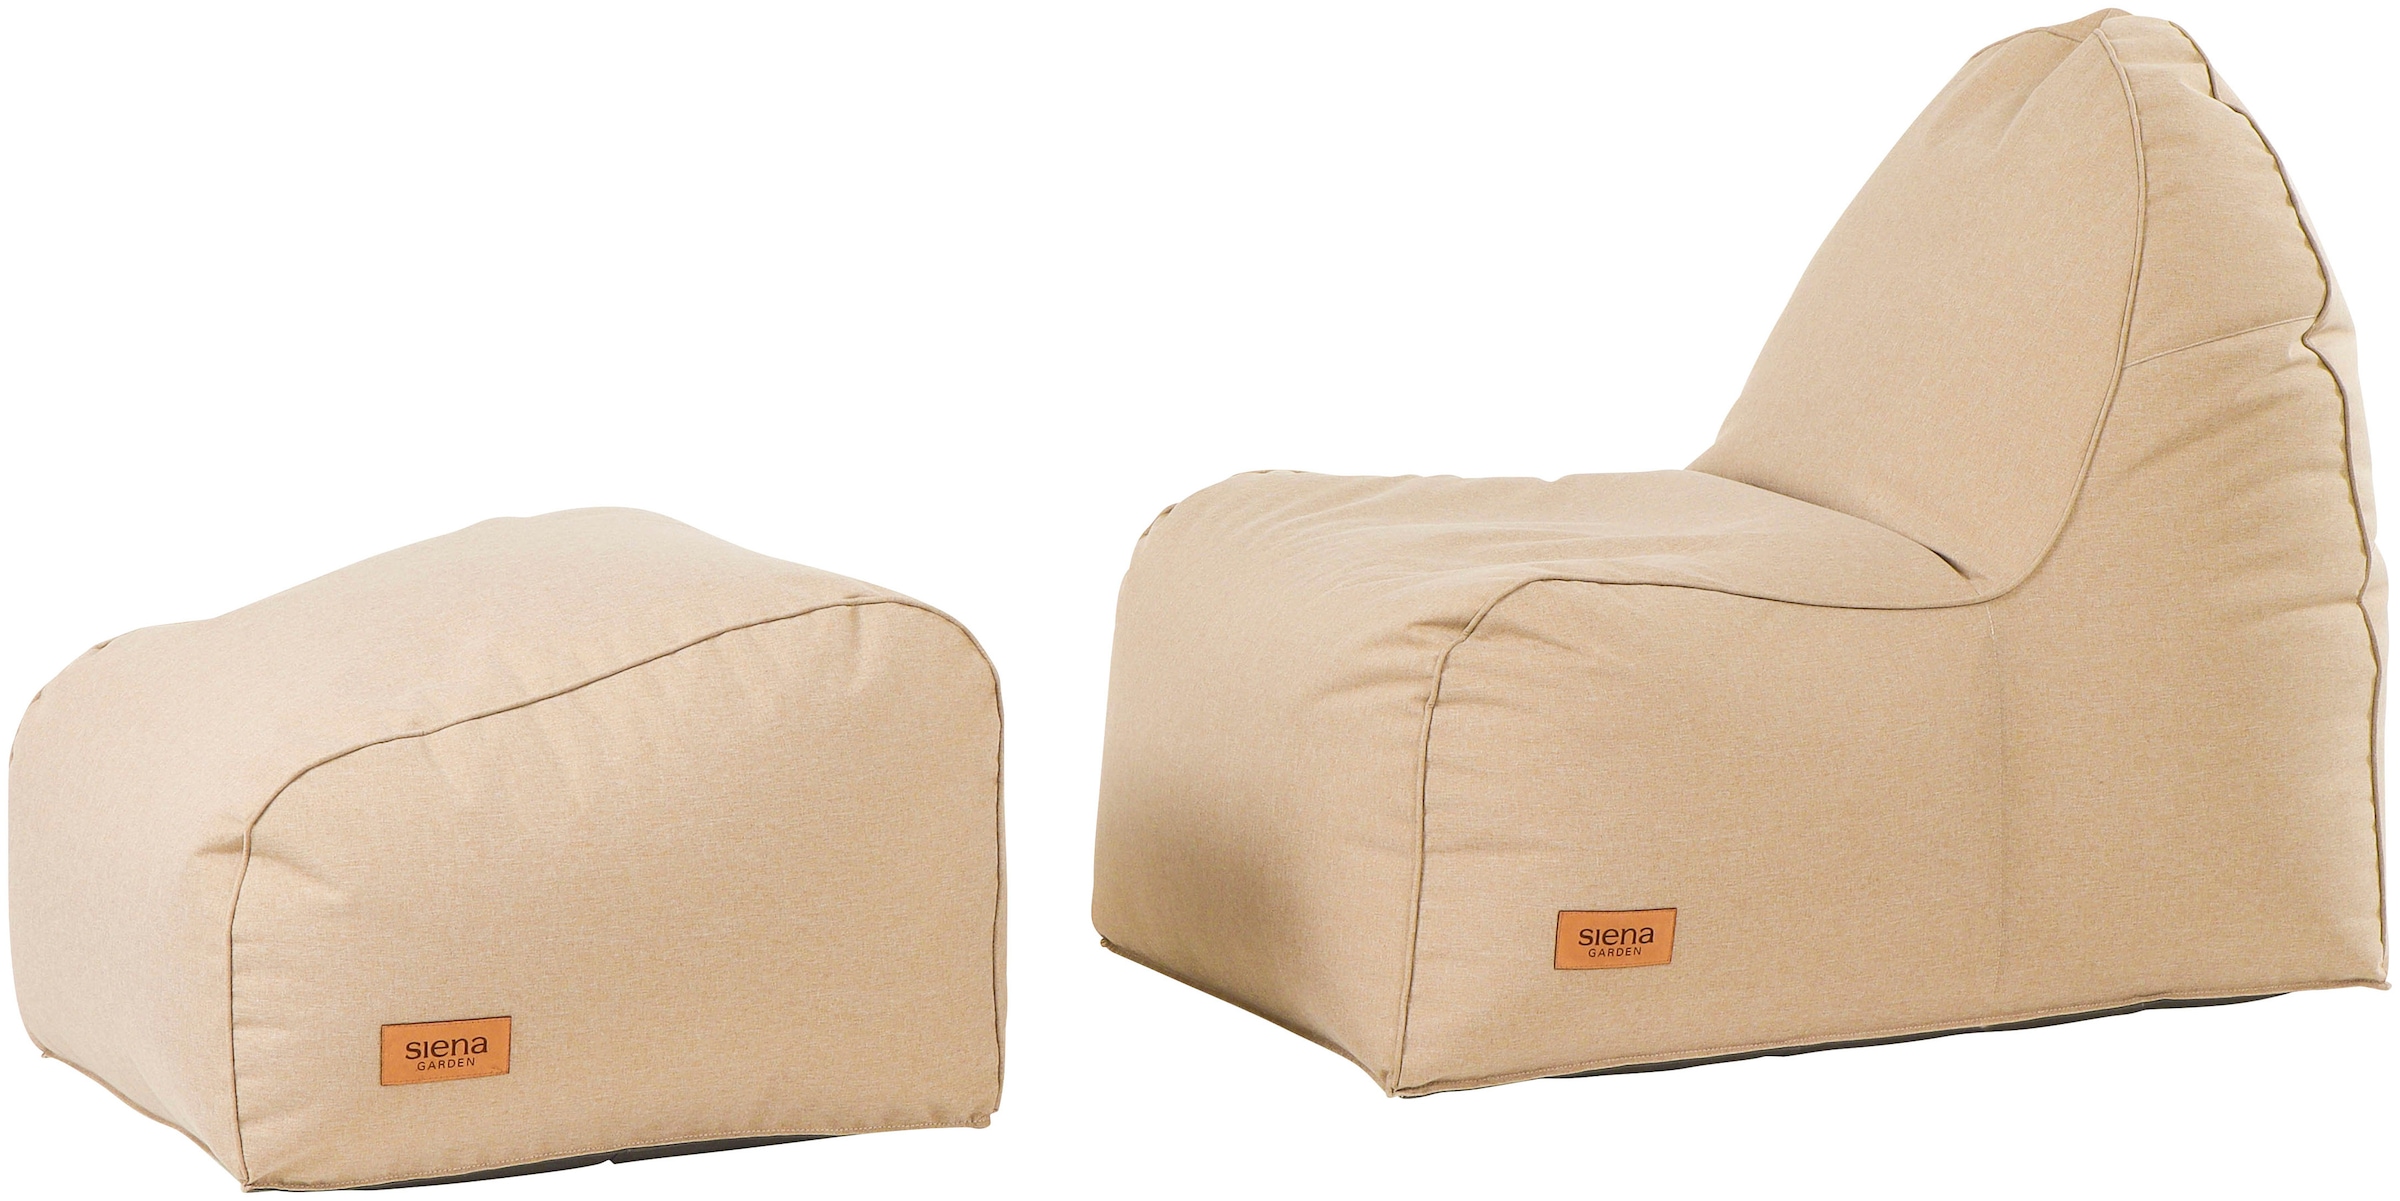 Siena Garden Sitzsack »FLOW.U Feet«, Indoor & Outdoor, in verschiedenen Farben erhältlich